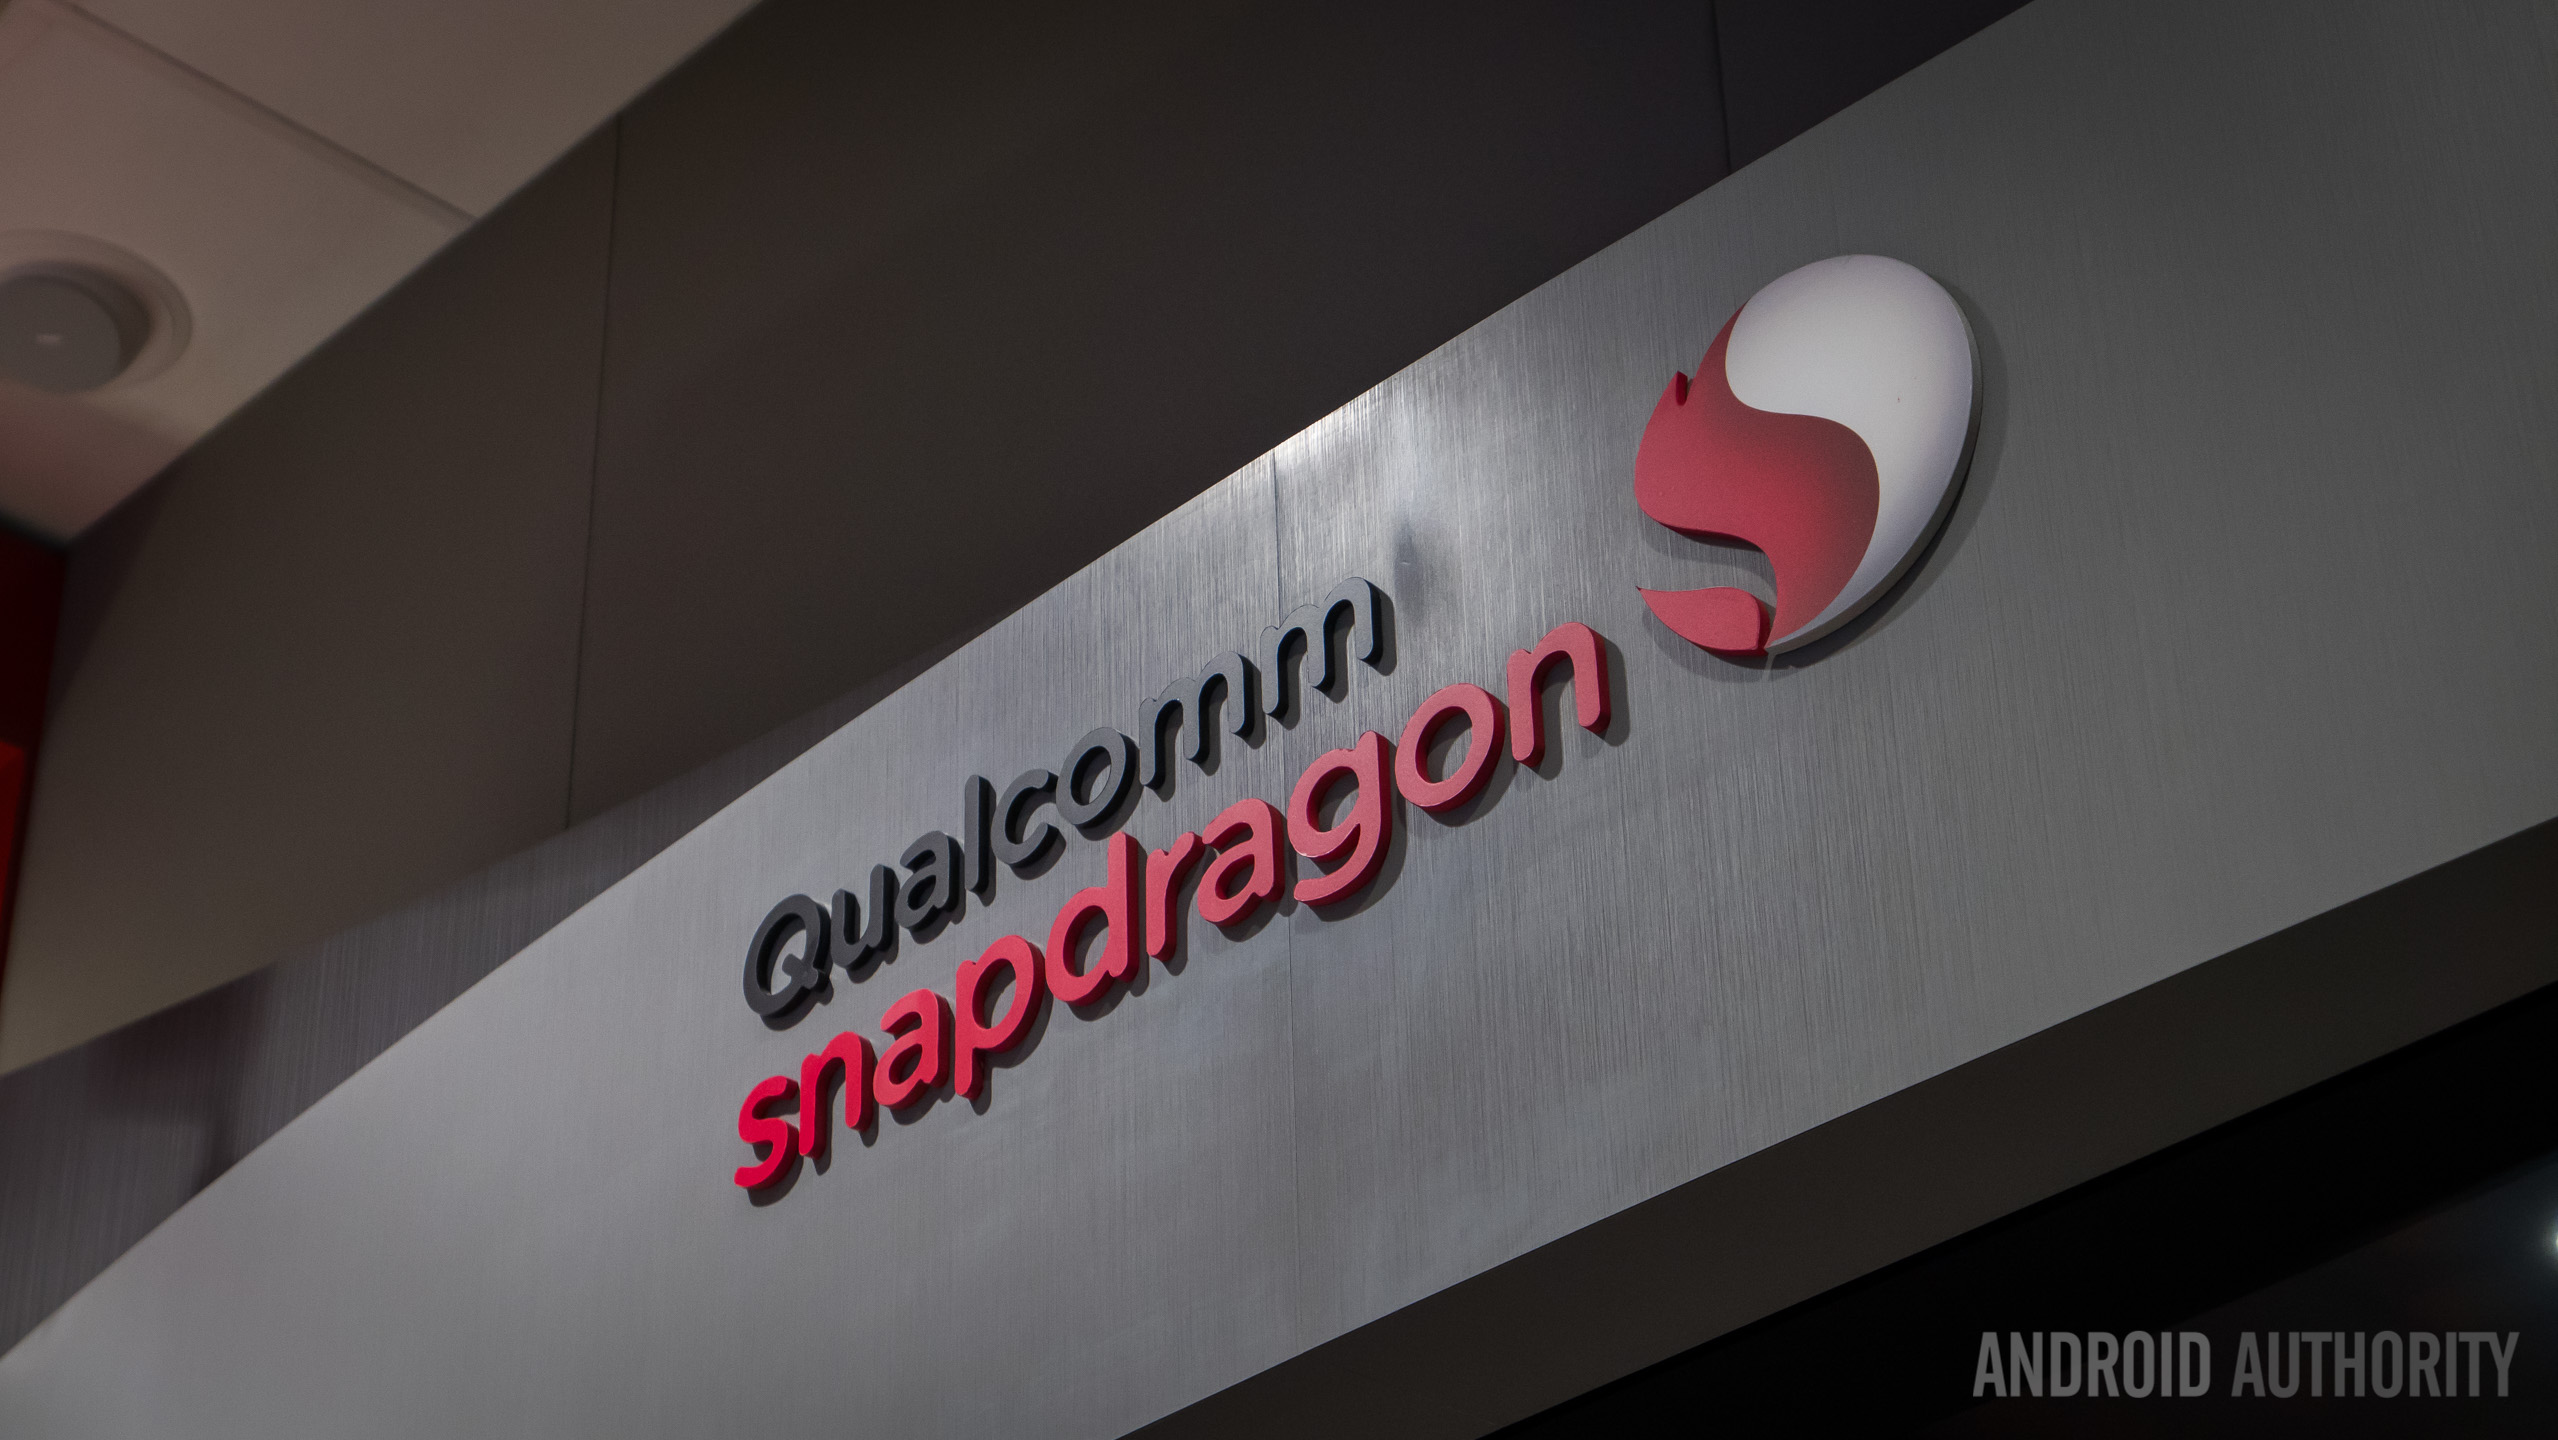 The Qualcomm Snapdragon logo.